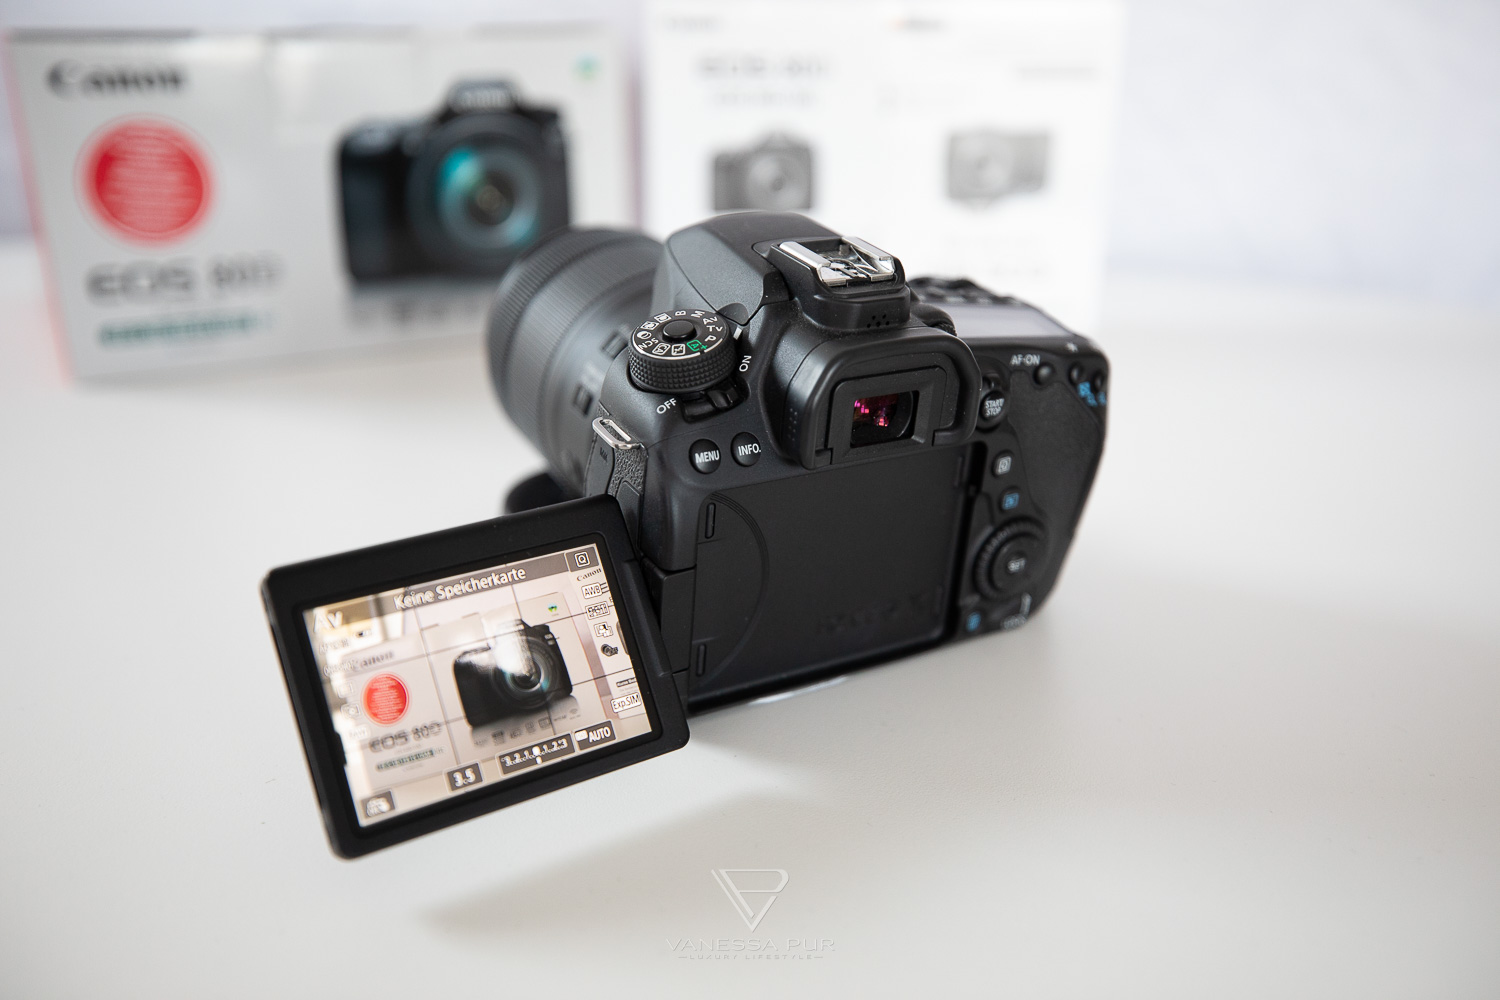 Canon 80D DSLR Kamera - die neue obere Mittelklasse von CANON - Canon EOS 80D - Kamera - Objektiv 18-135mm IS USM - 3,5-5,6 -Produkttest - Technikblog - Fotoblogger - Lifestyleblogger -24 Megapixel - 60fps